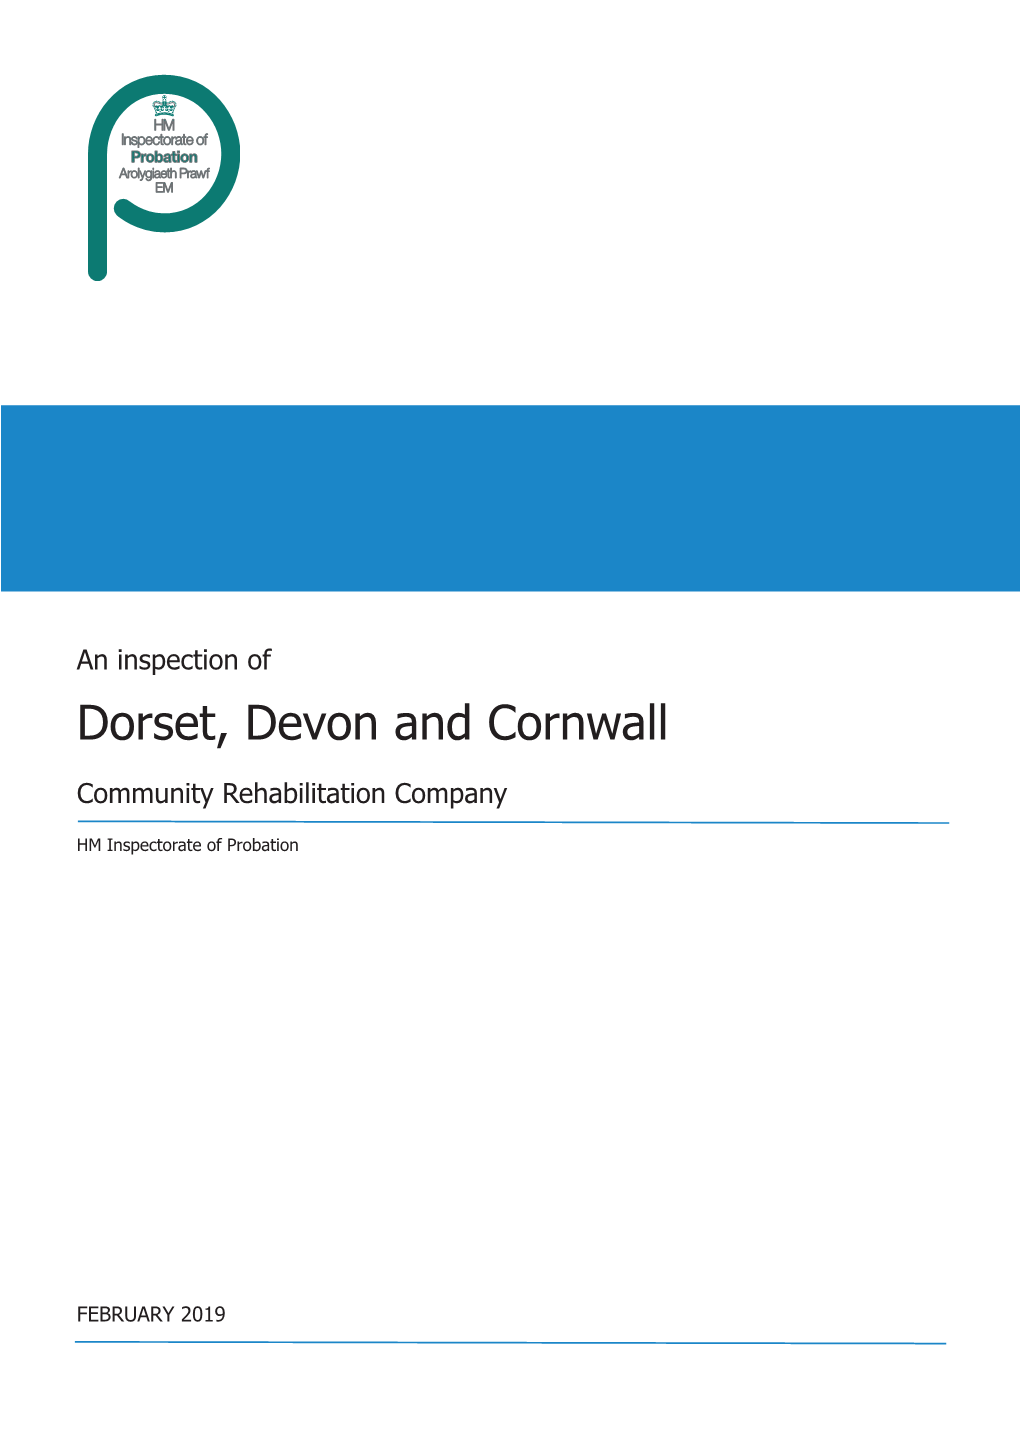 An Inspection of Dorset, Devon and Cornwall Community Rehabilitation